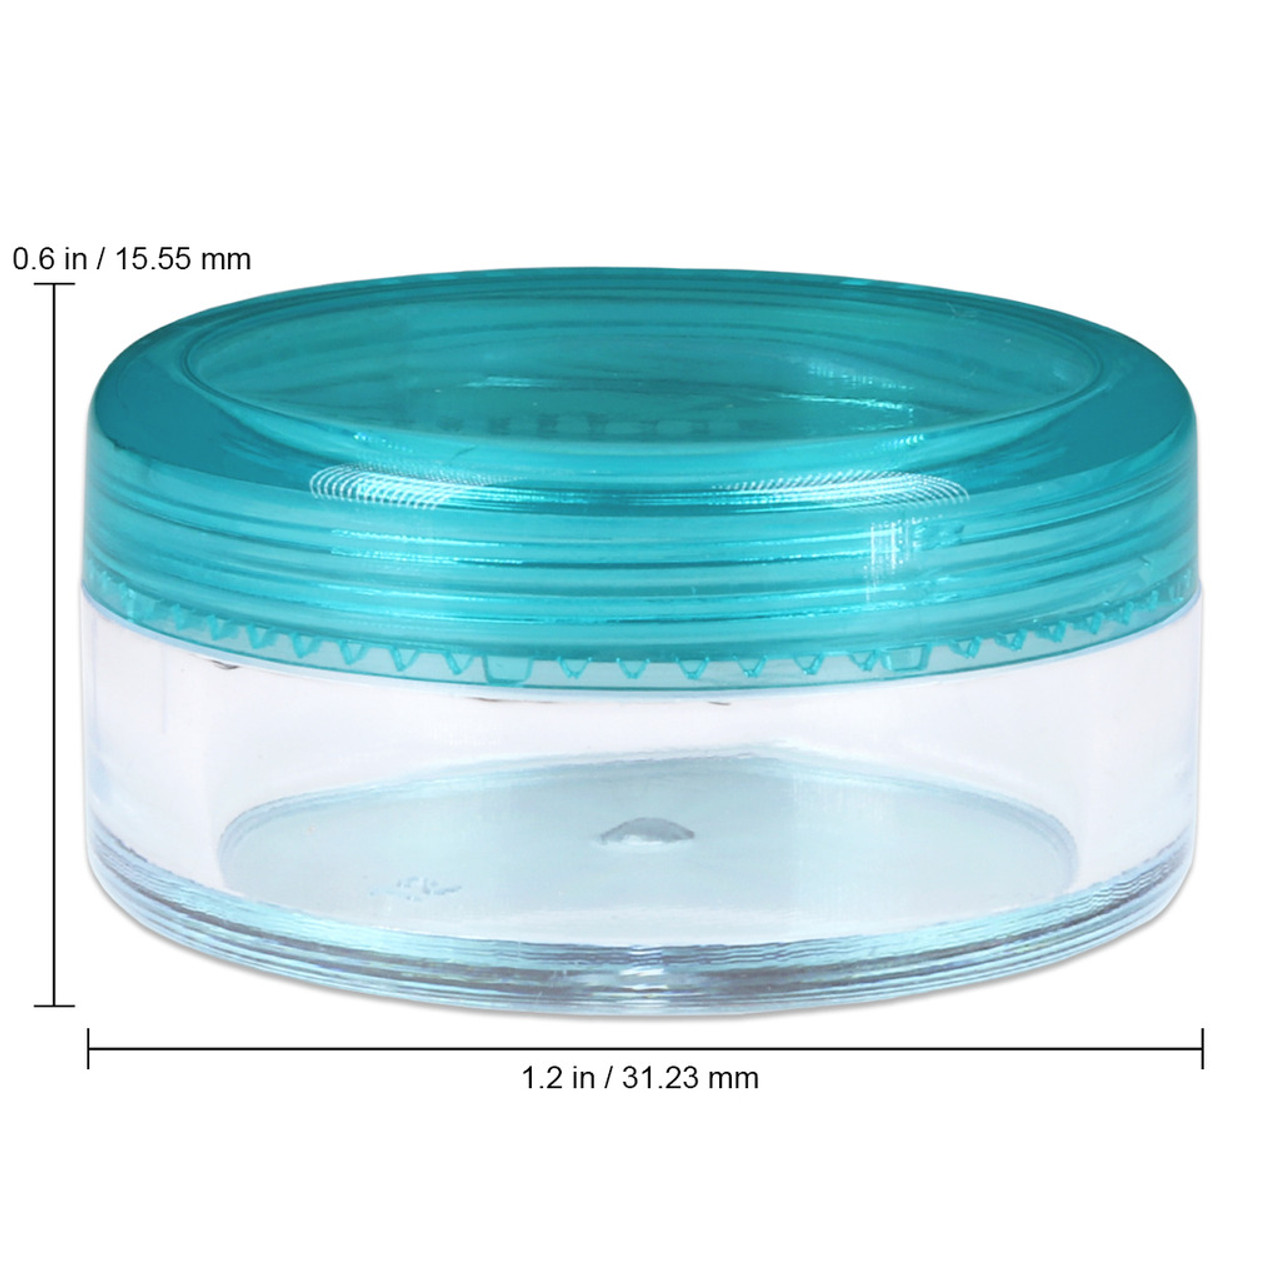 Premium Photo  Small plastic containers with colored liquids